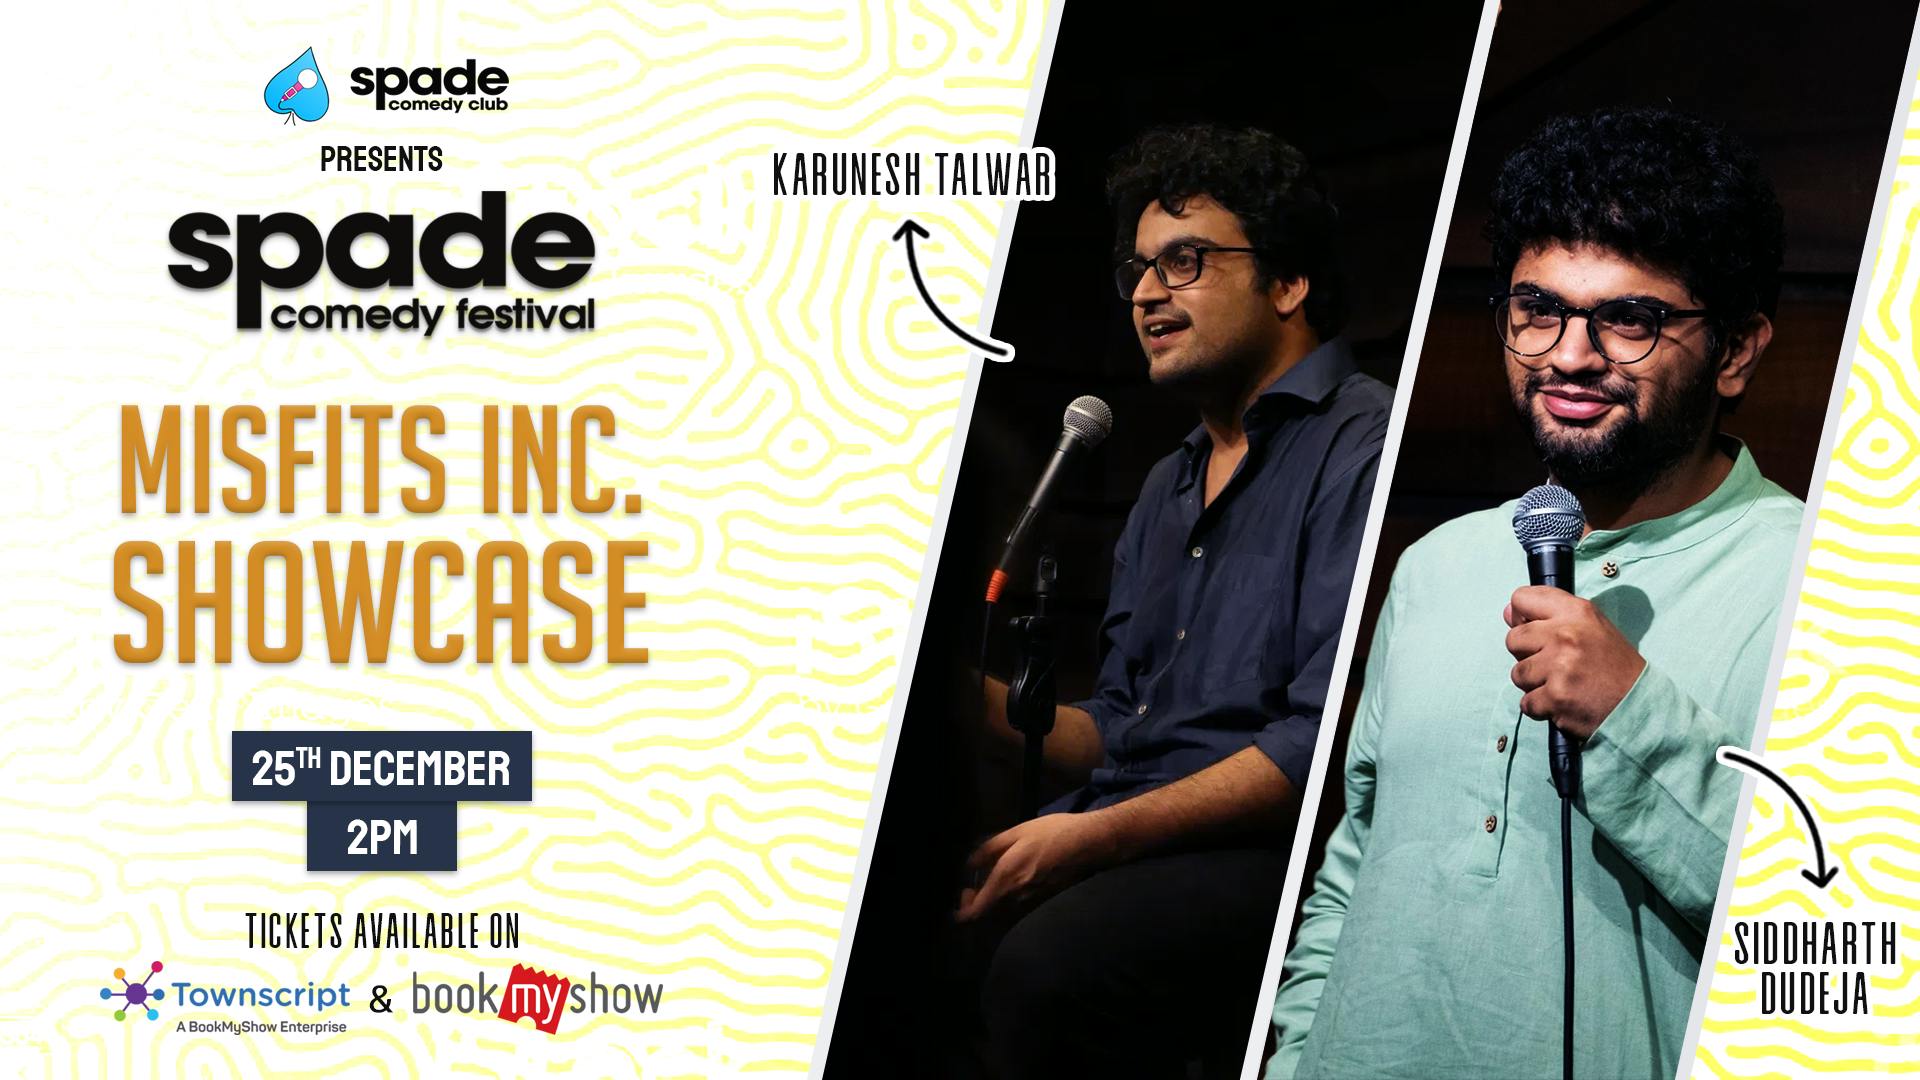 Misfits Inc. Showcase ft. Karunesh Talwar and Siddharth Dudeja at Spade Comedy Festival